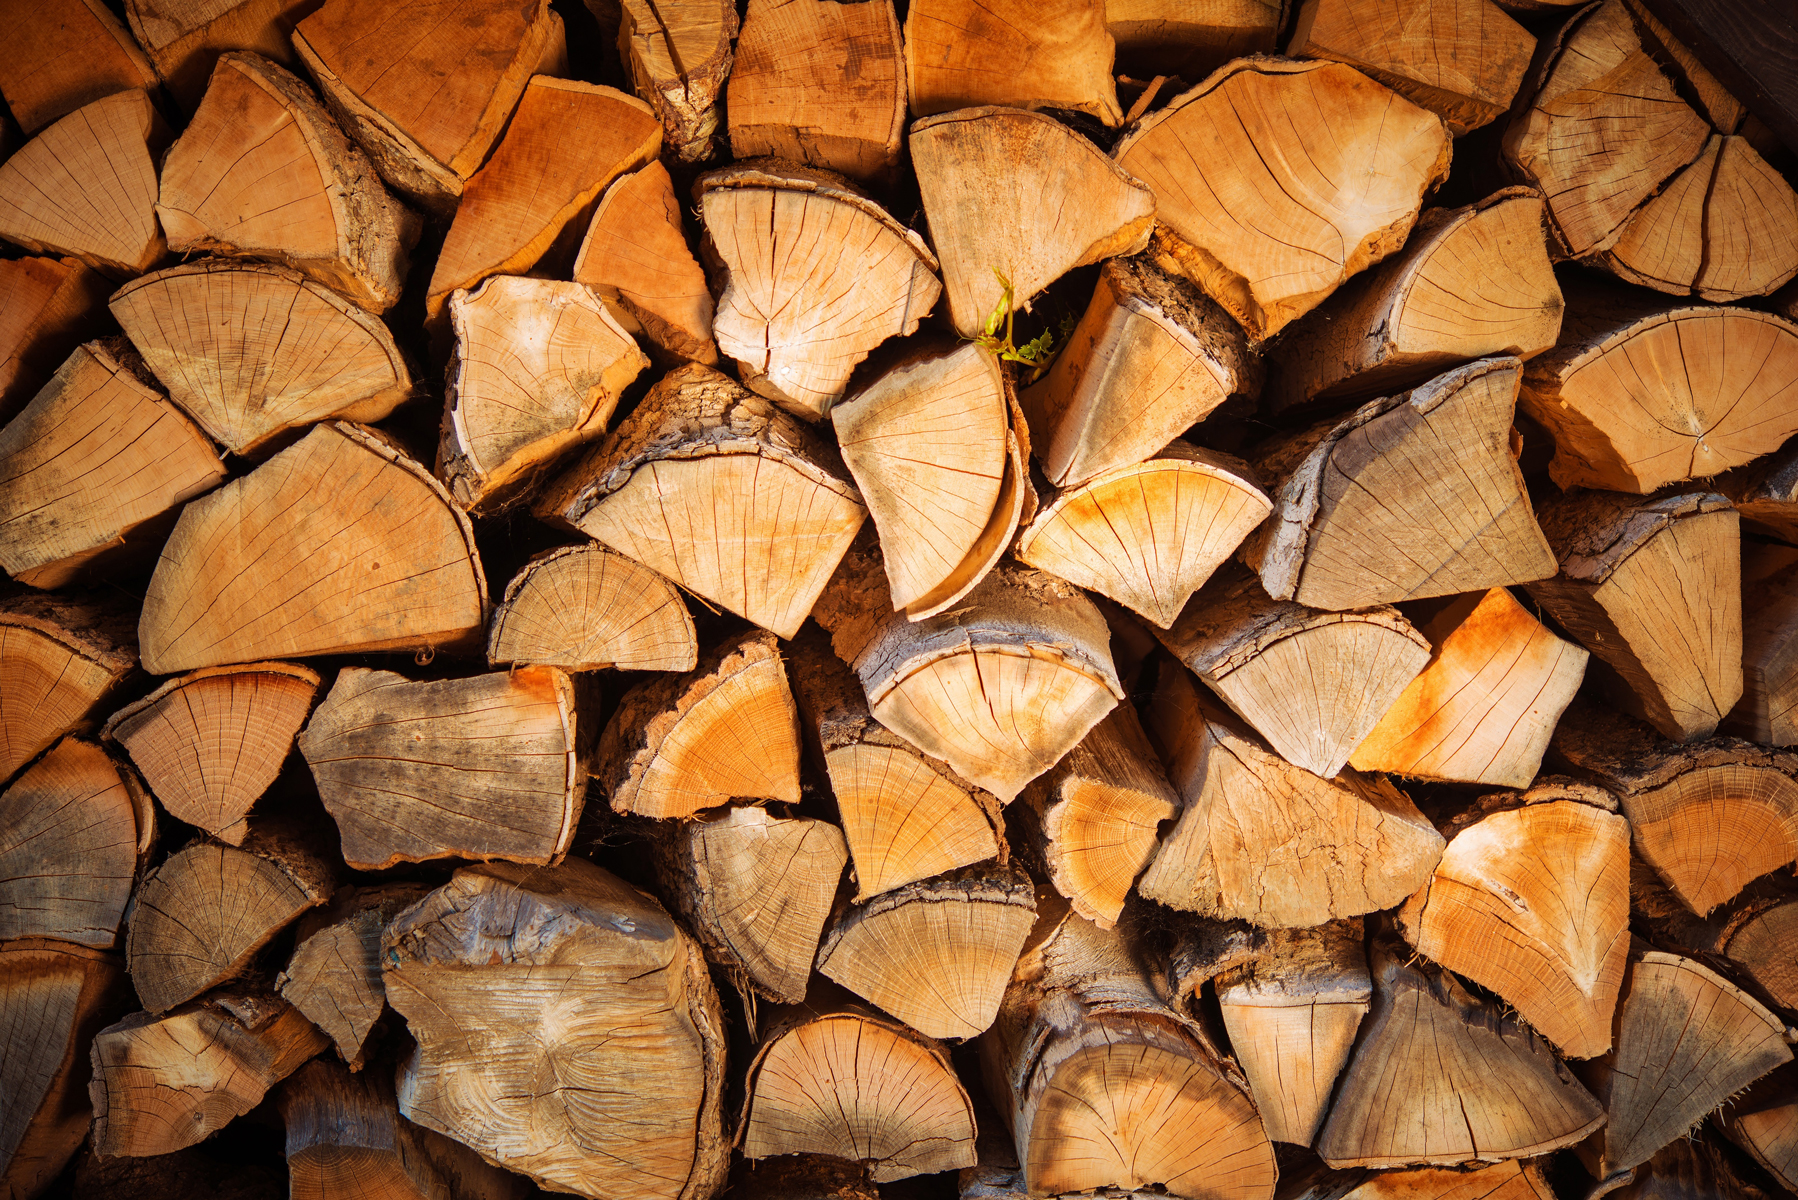 Quality Firewood for Sale - Pine Straw King Marietta